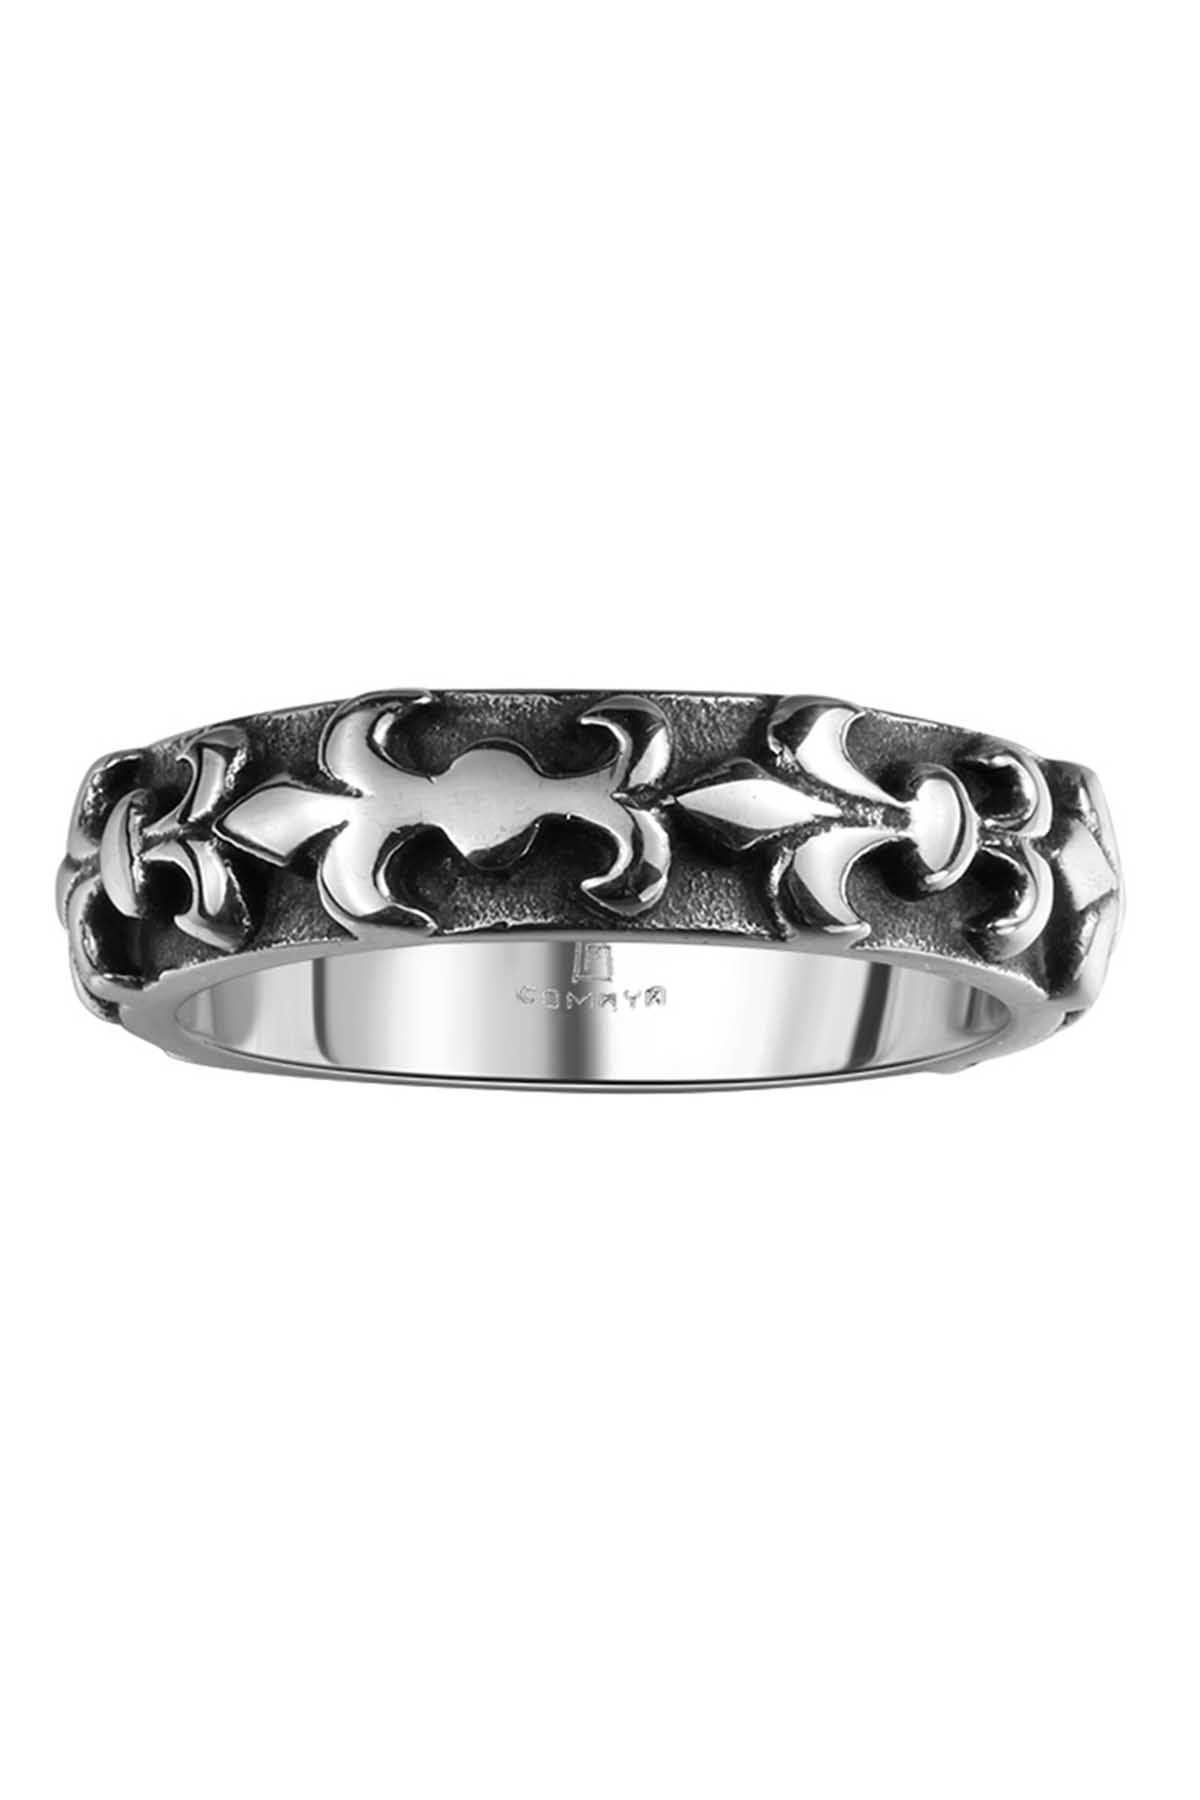 Gomaya Thin Fleur Stainless Steel Ring